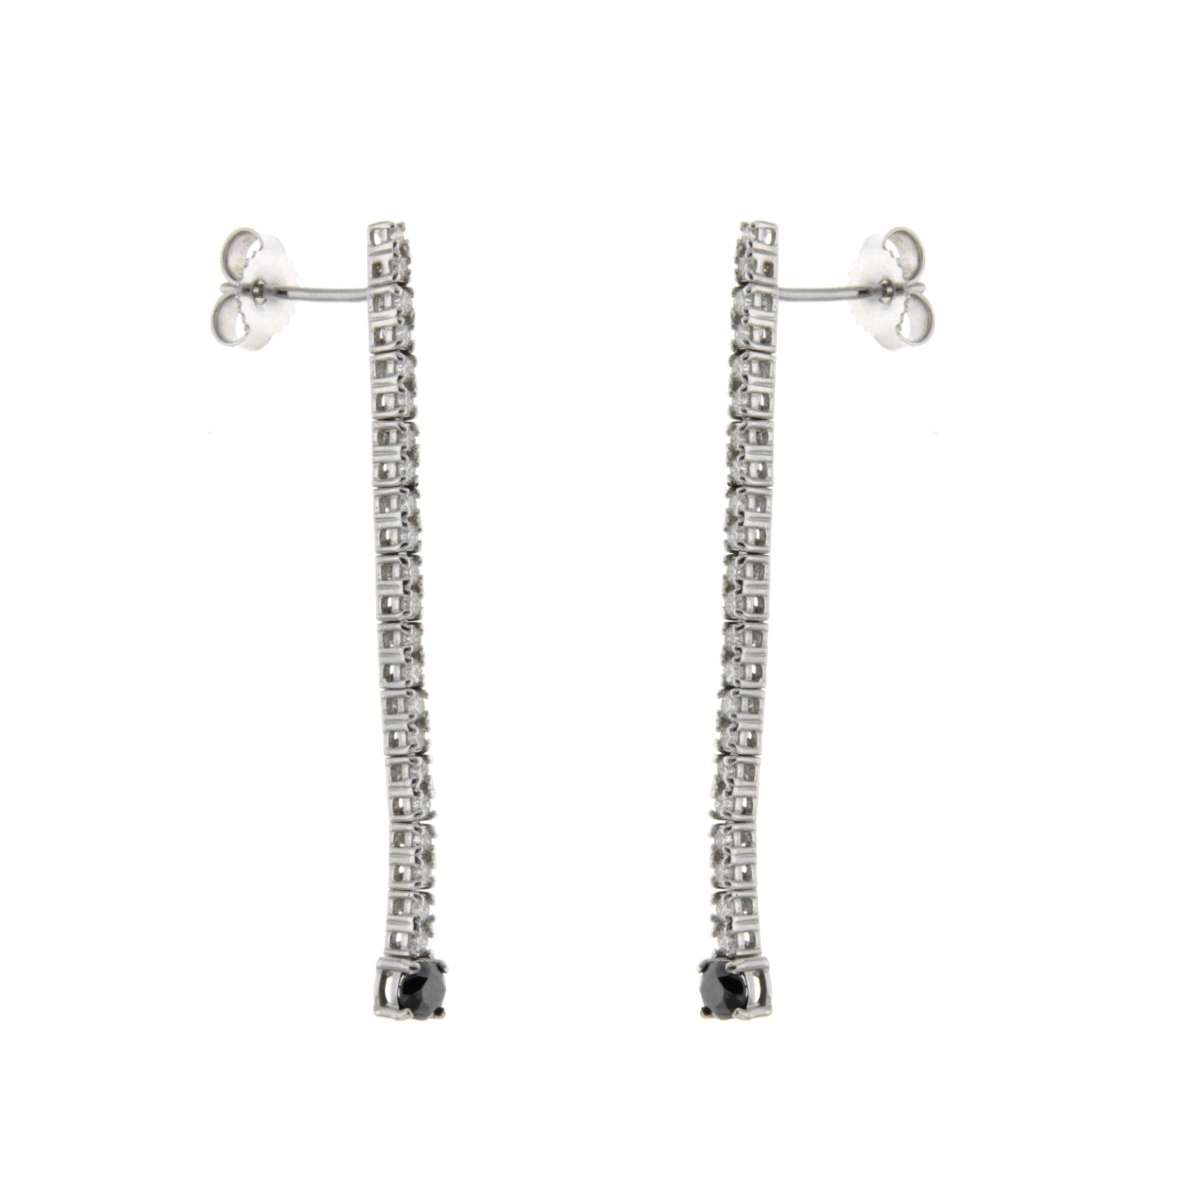 Tennis earrings white and black diamonds G-VS1 0.84 total carats